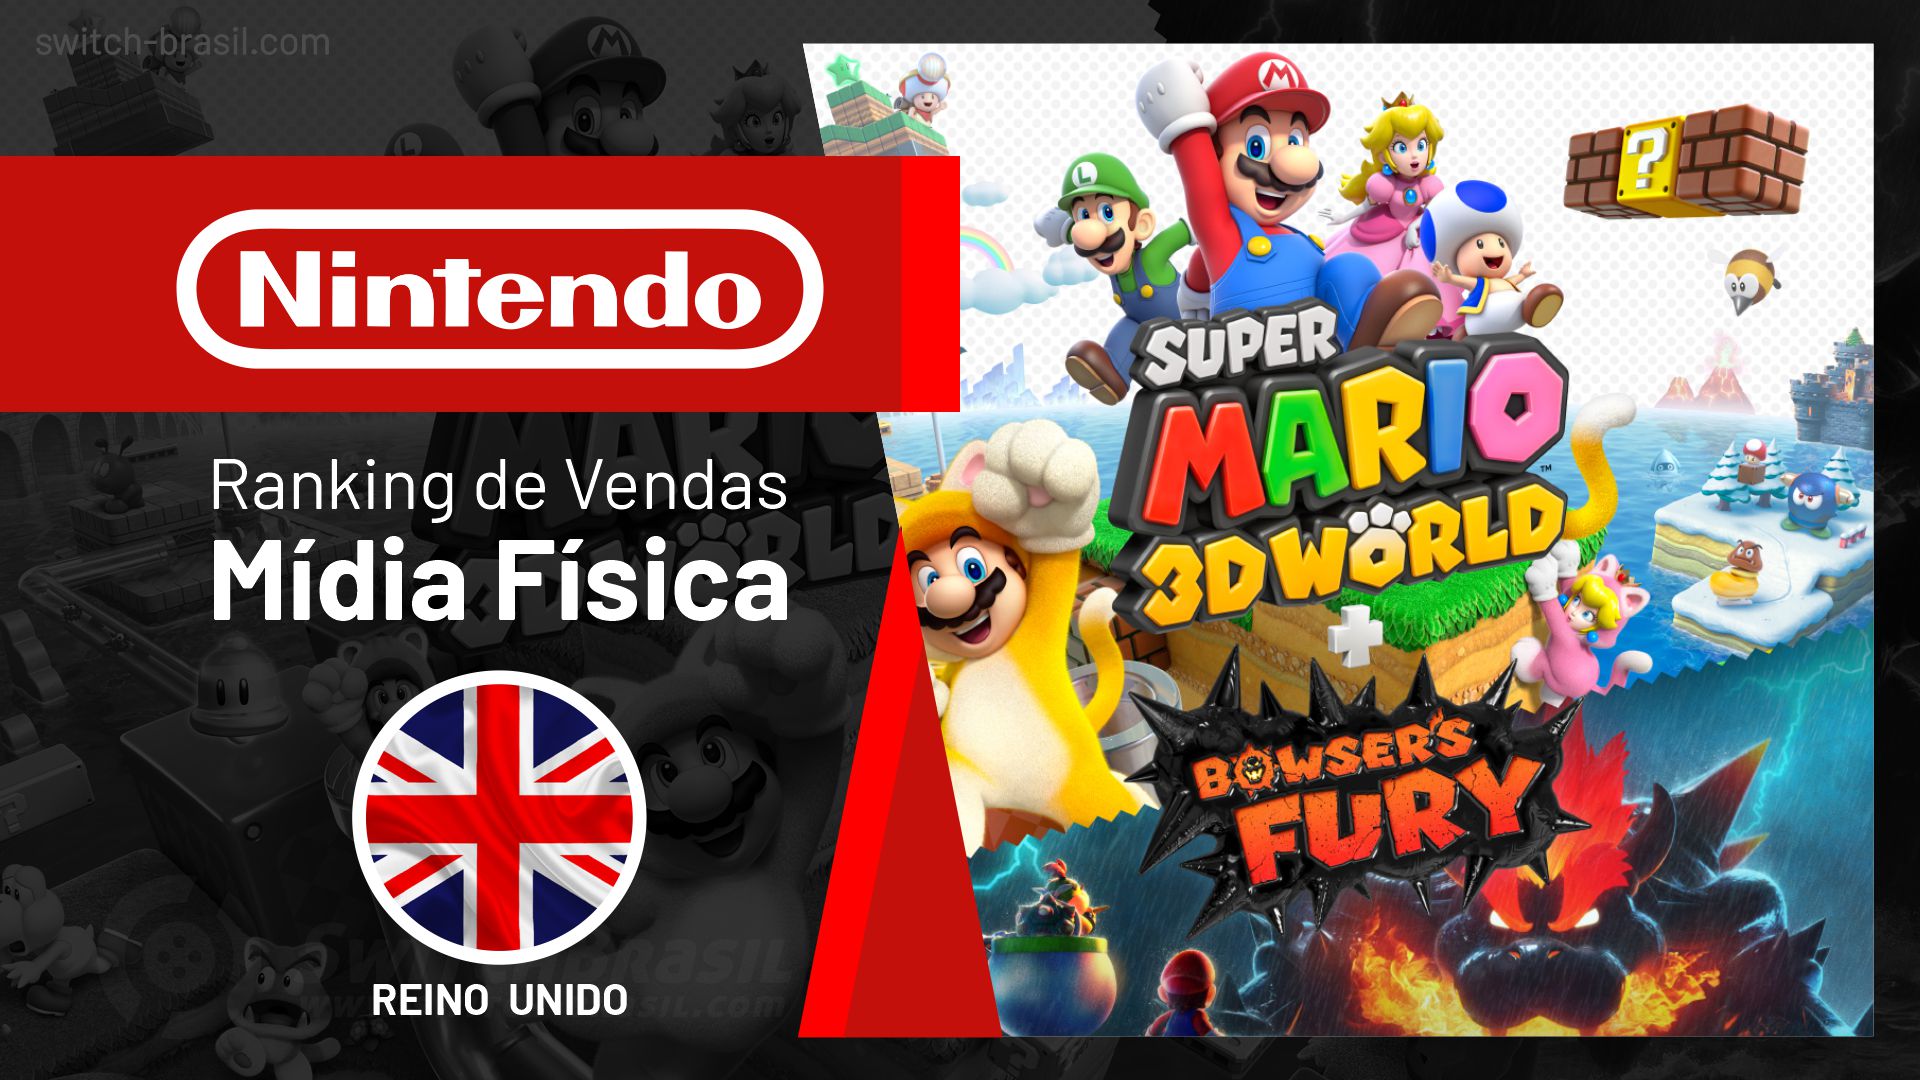 Jogo Super Mario 3D World + Bowser's Fury Nintendo Switch Mídia Física